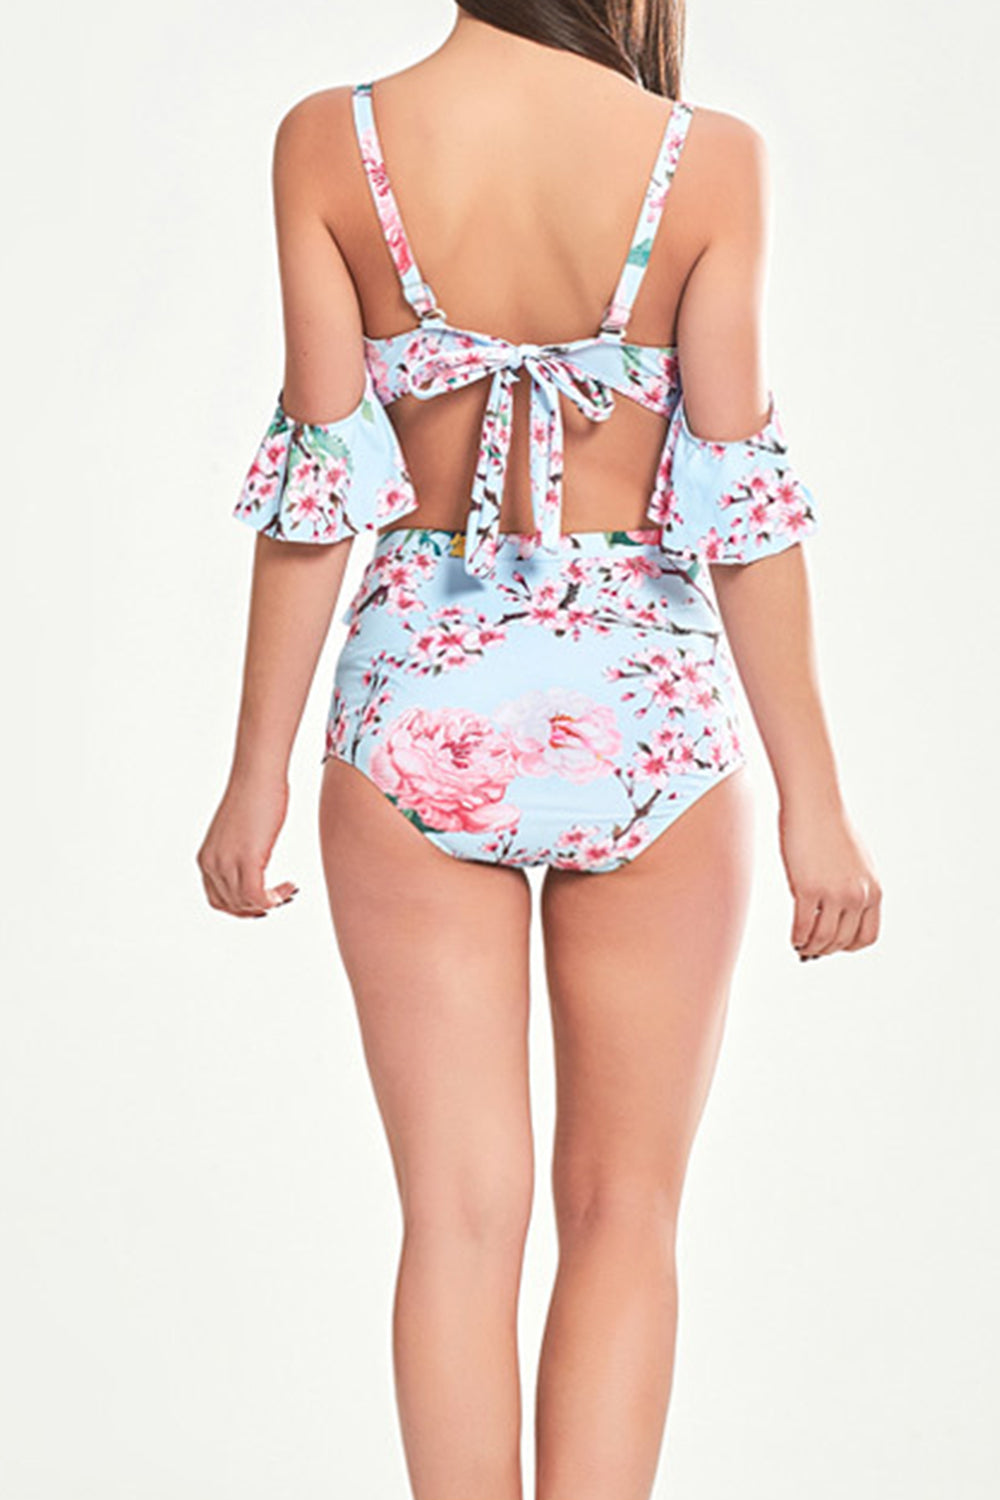 Iyasson Floral Printing High-waisted fit Falbala Bikini Sets